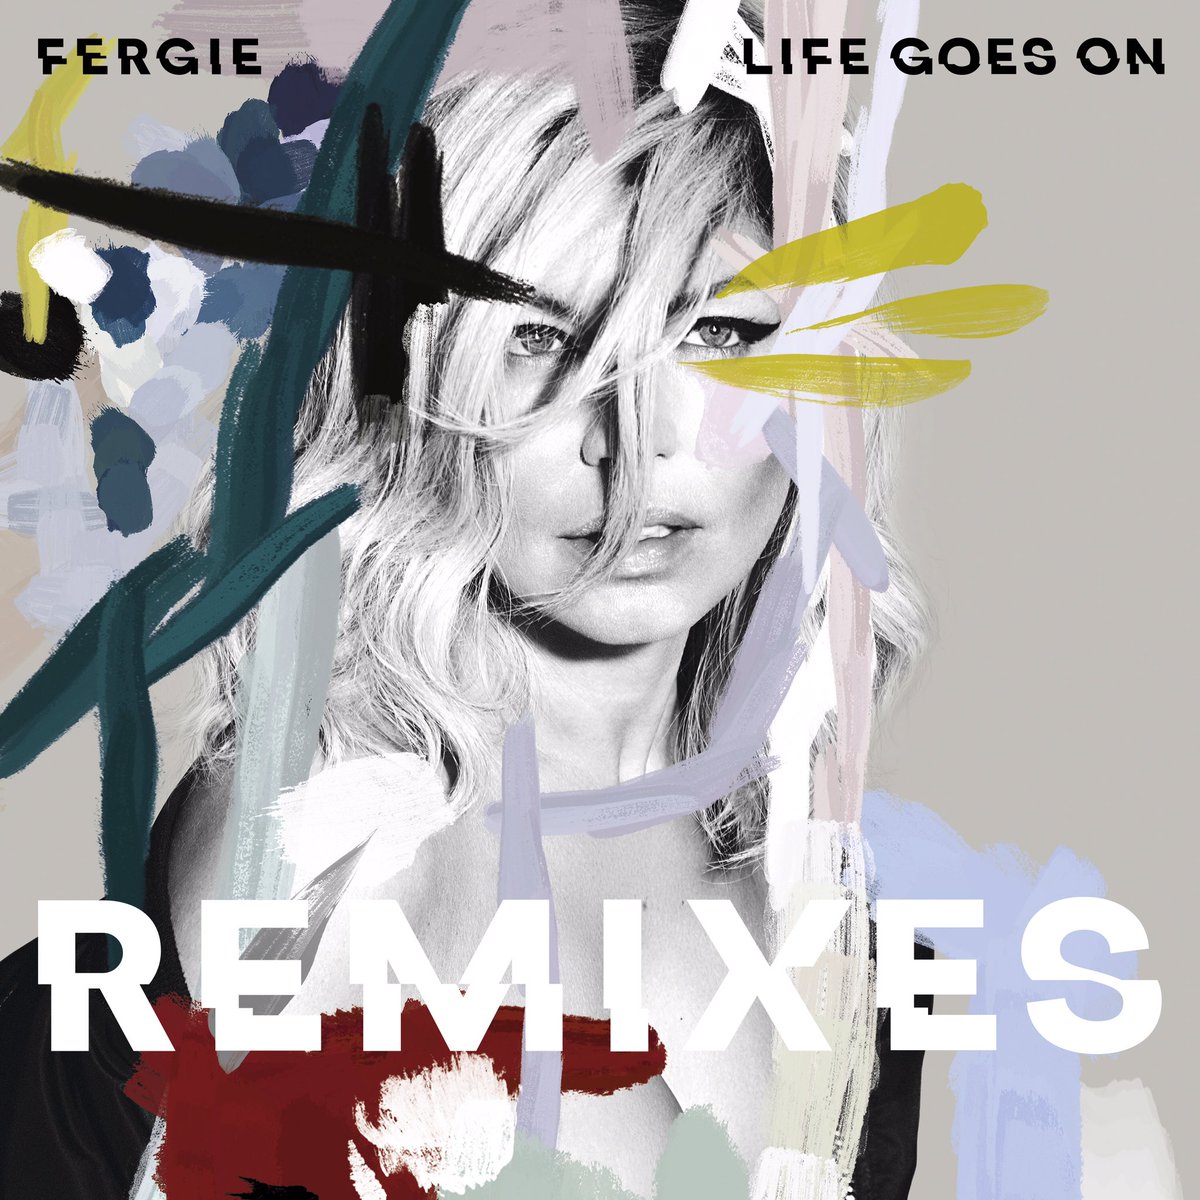 #LifeGoesOn Remix EP out now ????????
https://t.co/ZVDYjbcKYE https://t.co/VFLEmRopaM